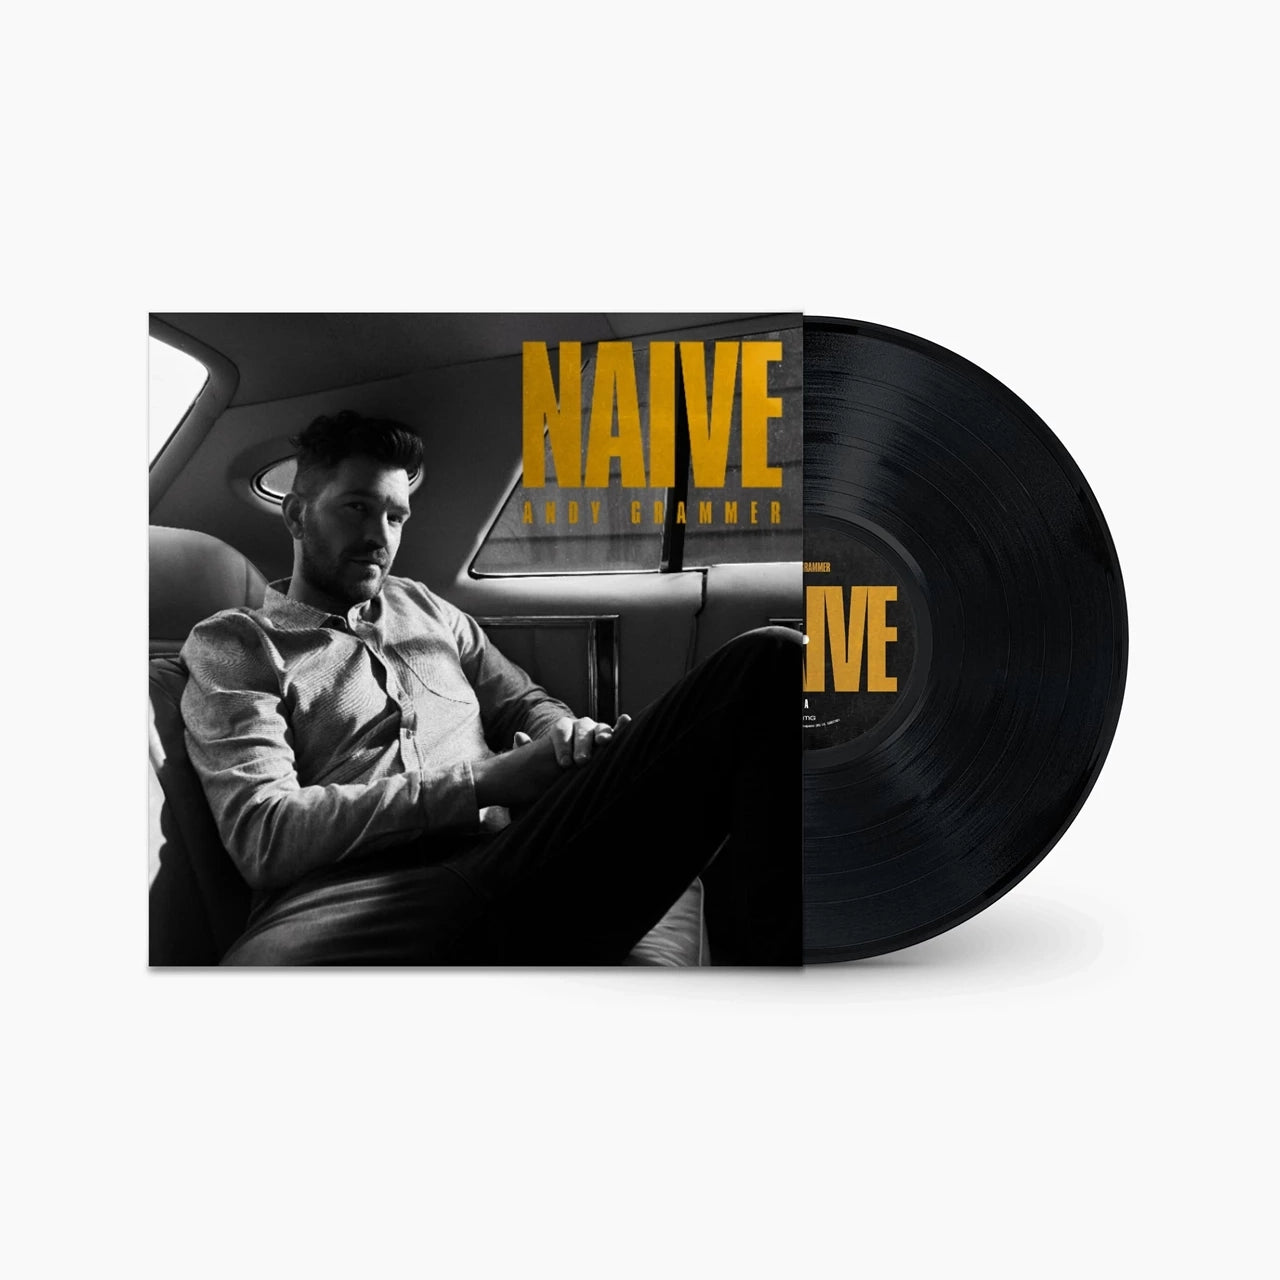 Andy Grammer: Naïve Vinyl LP